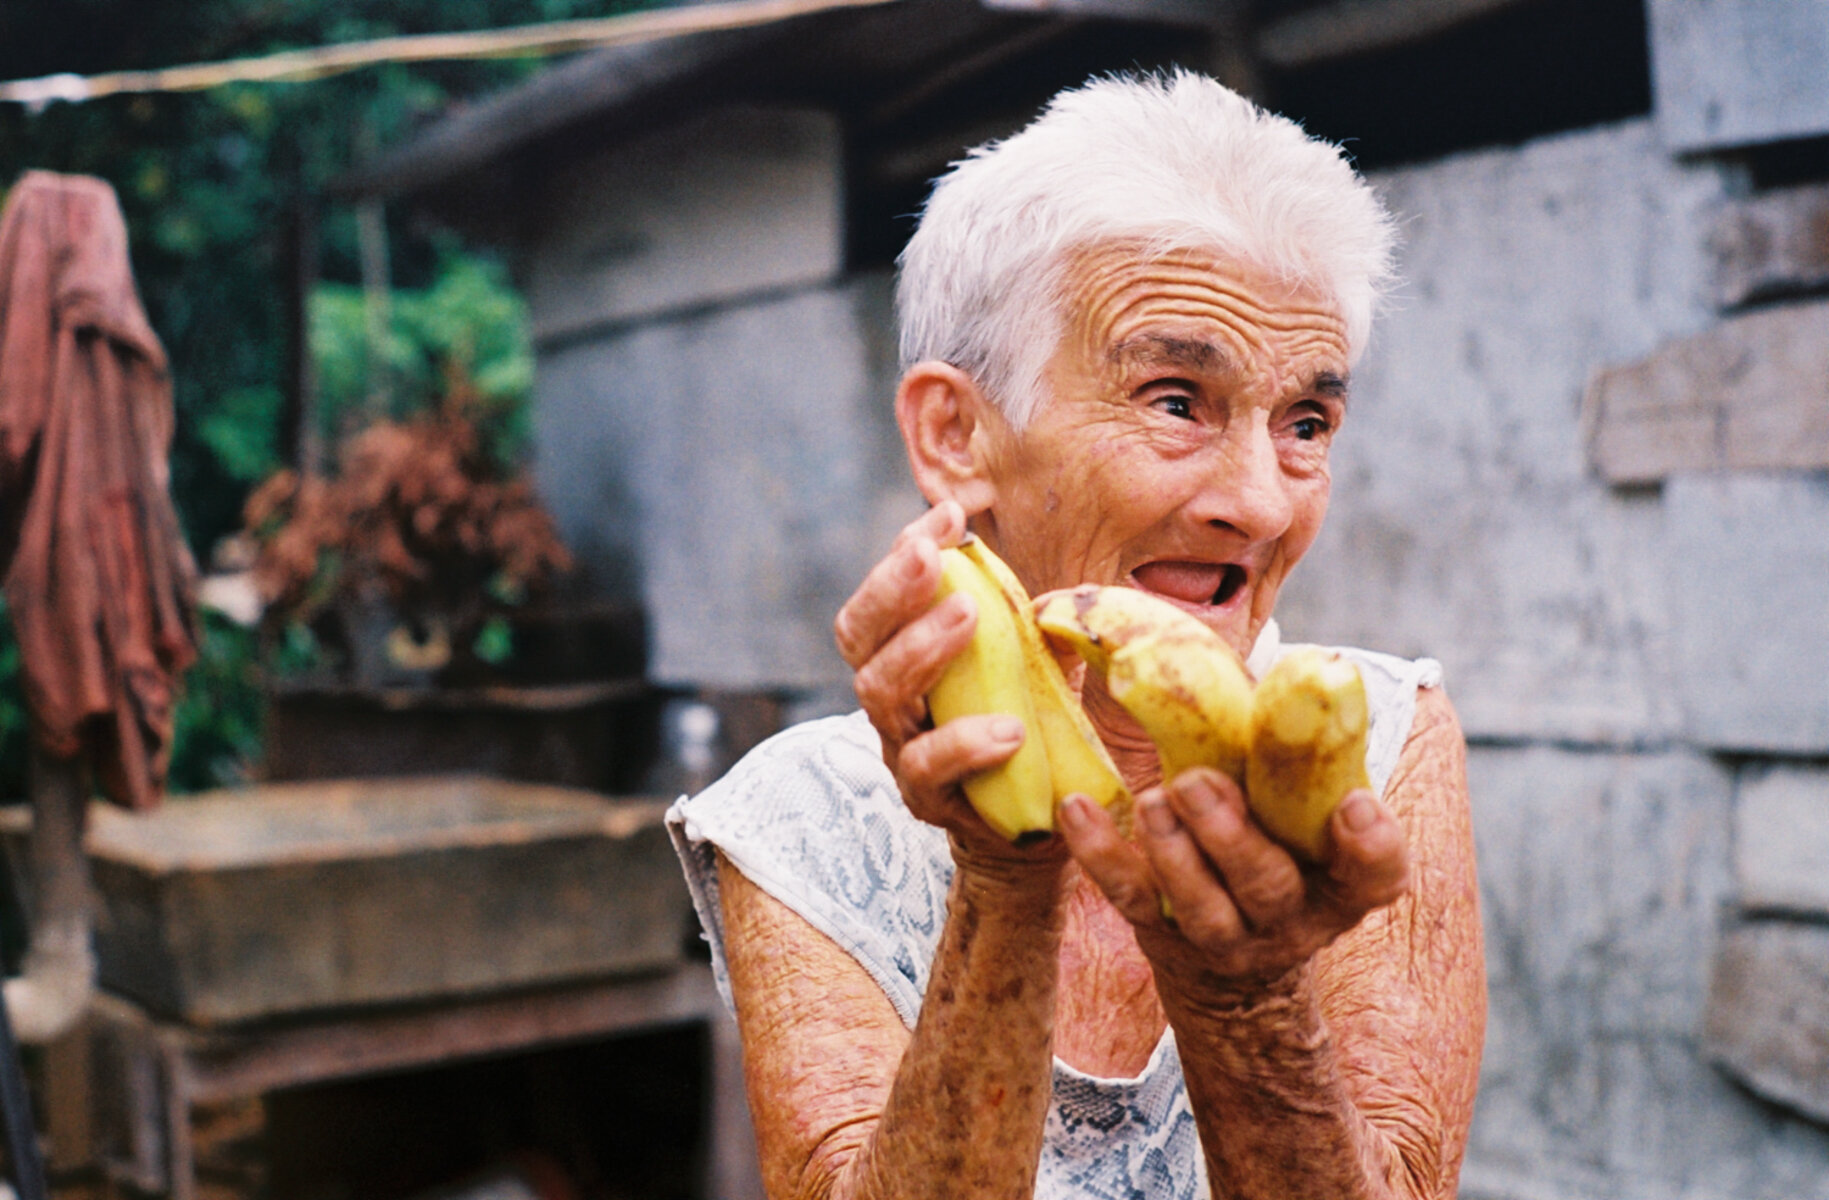  Woman with bananas | Rural Cuba 